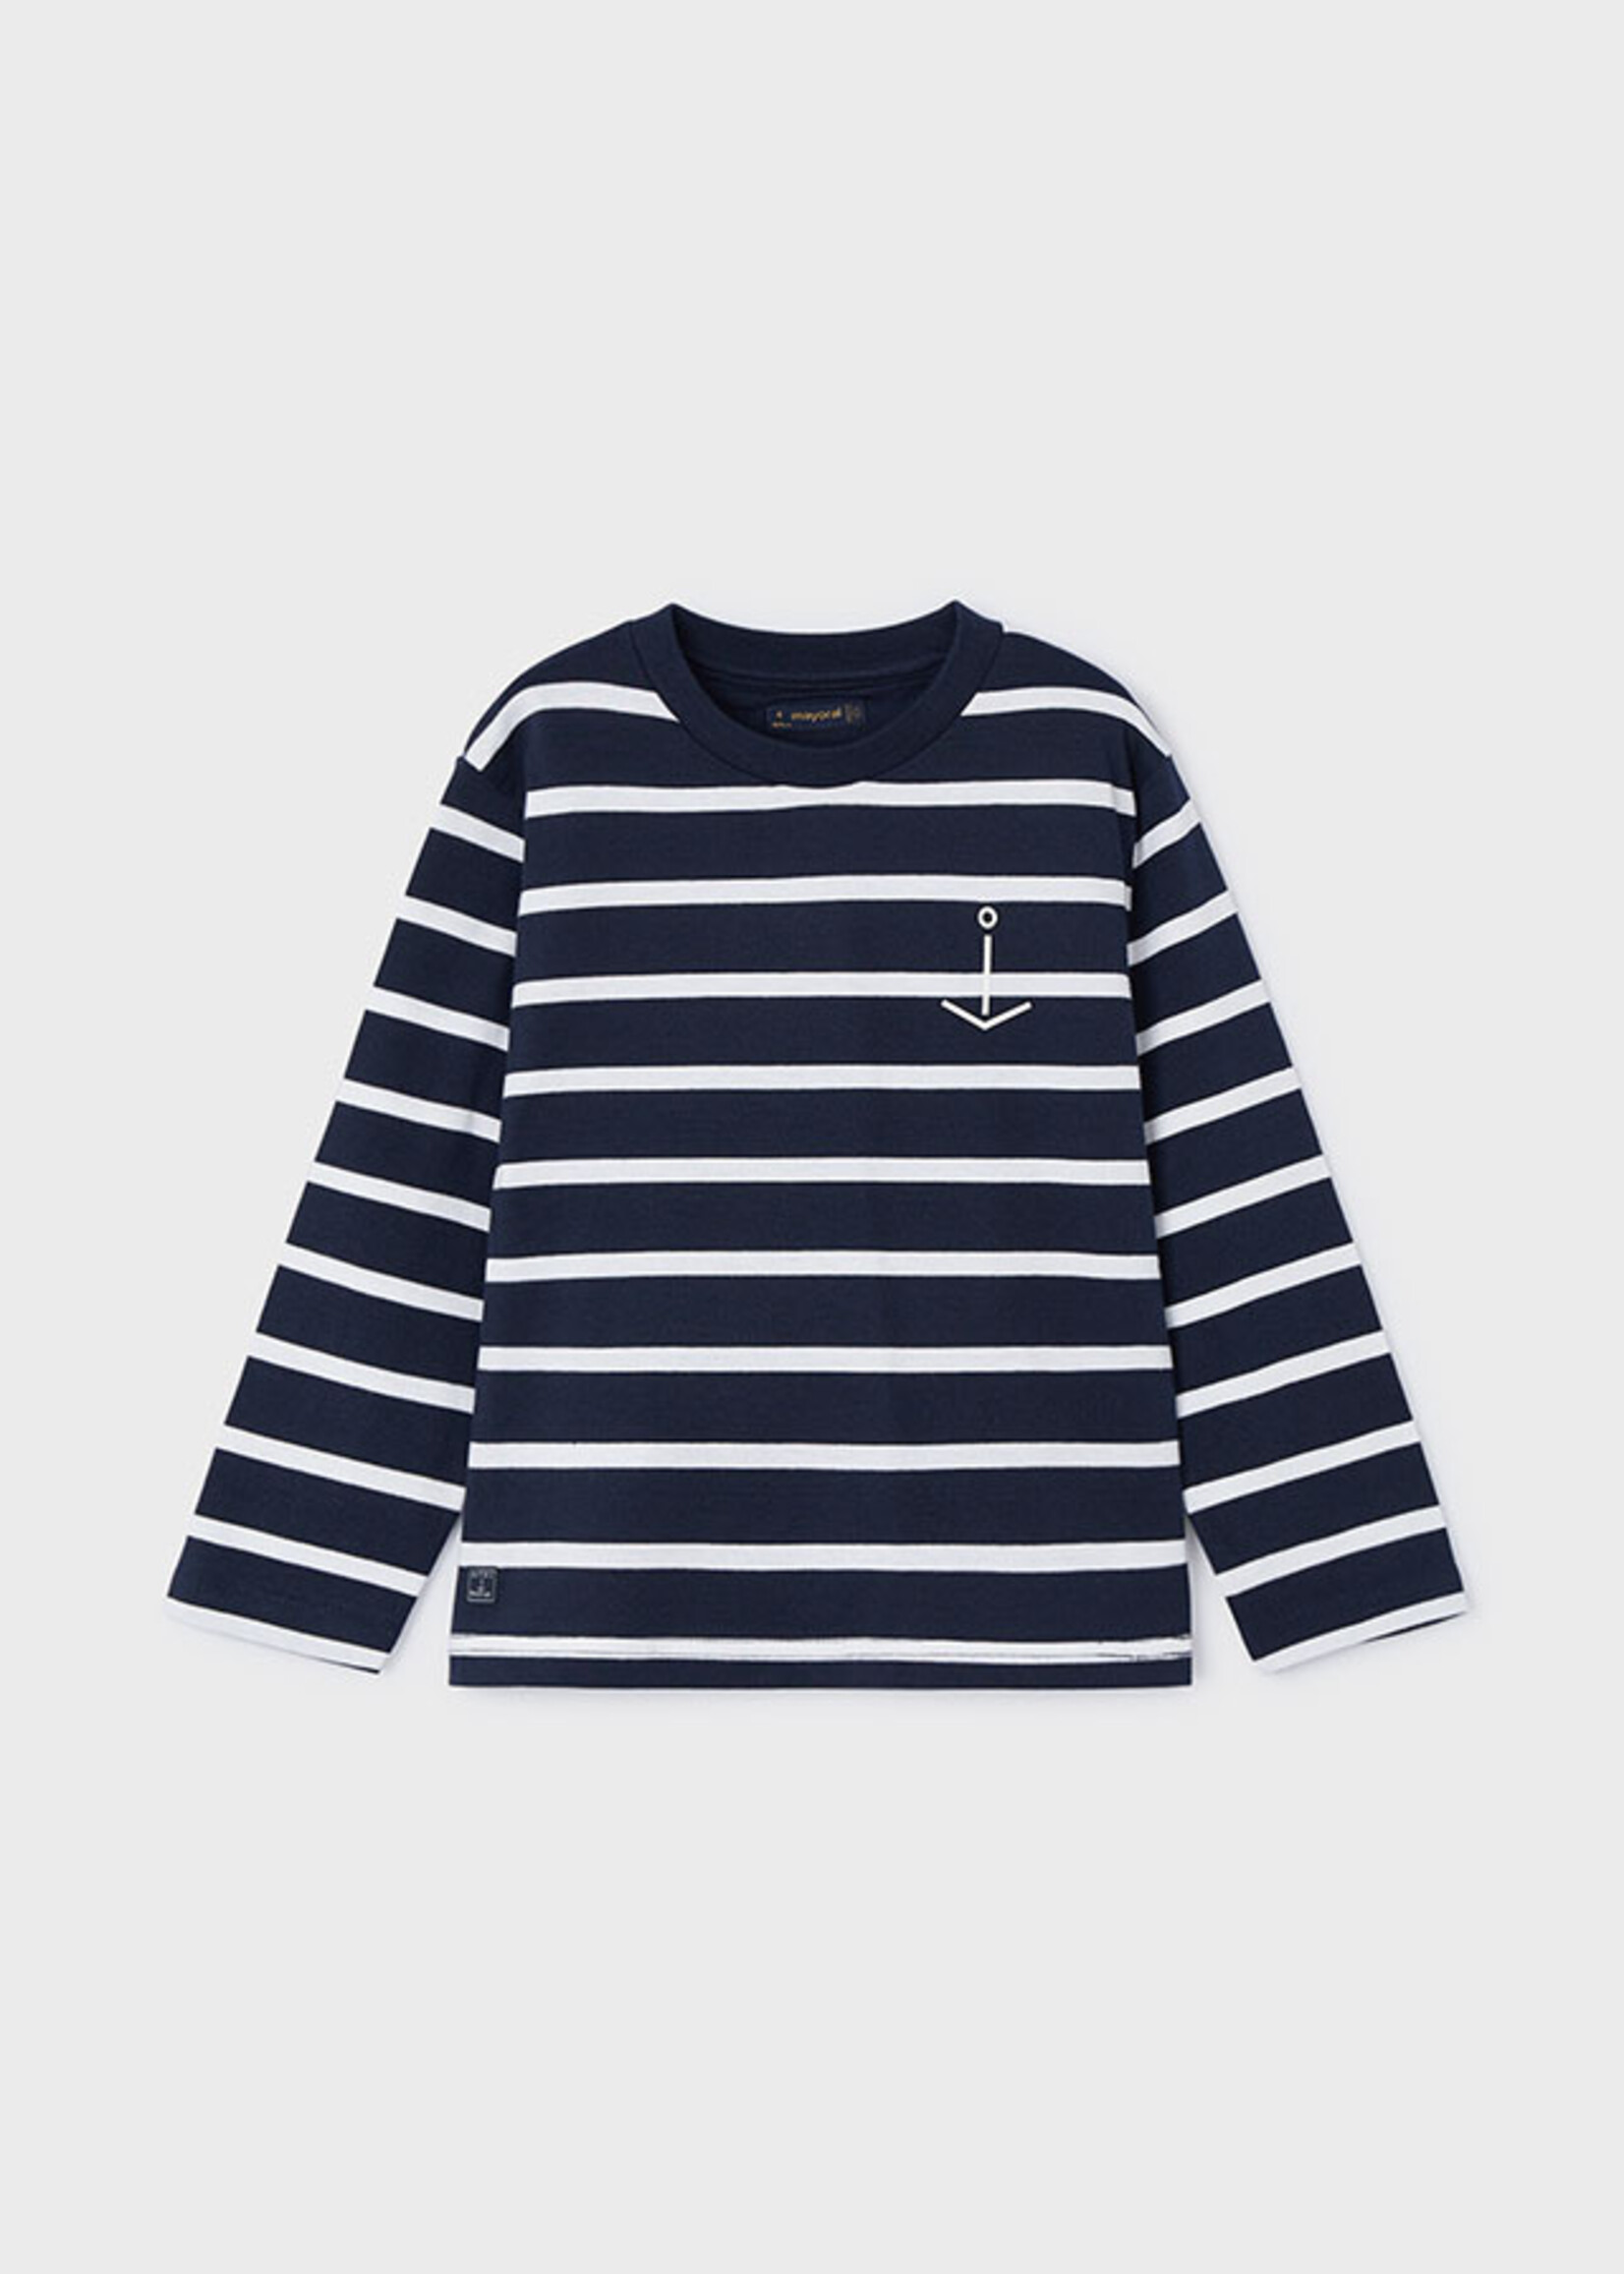 Mayoral Mini Boy             3025 L/s stripes t-shirt           Navy